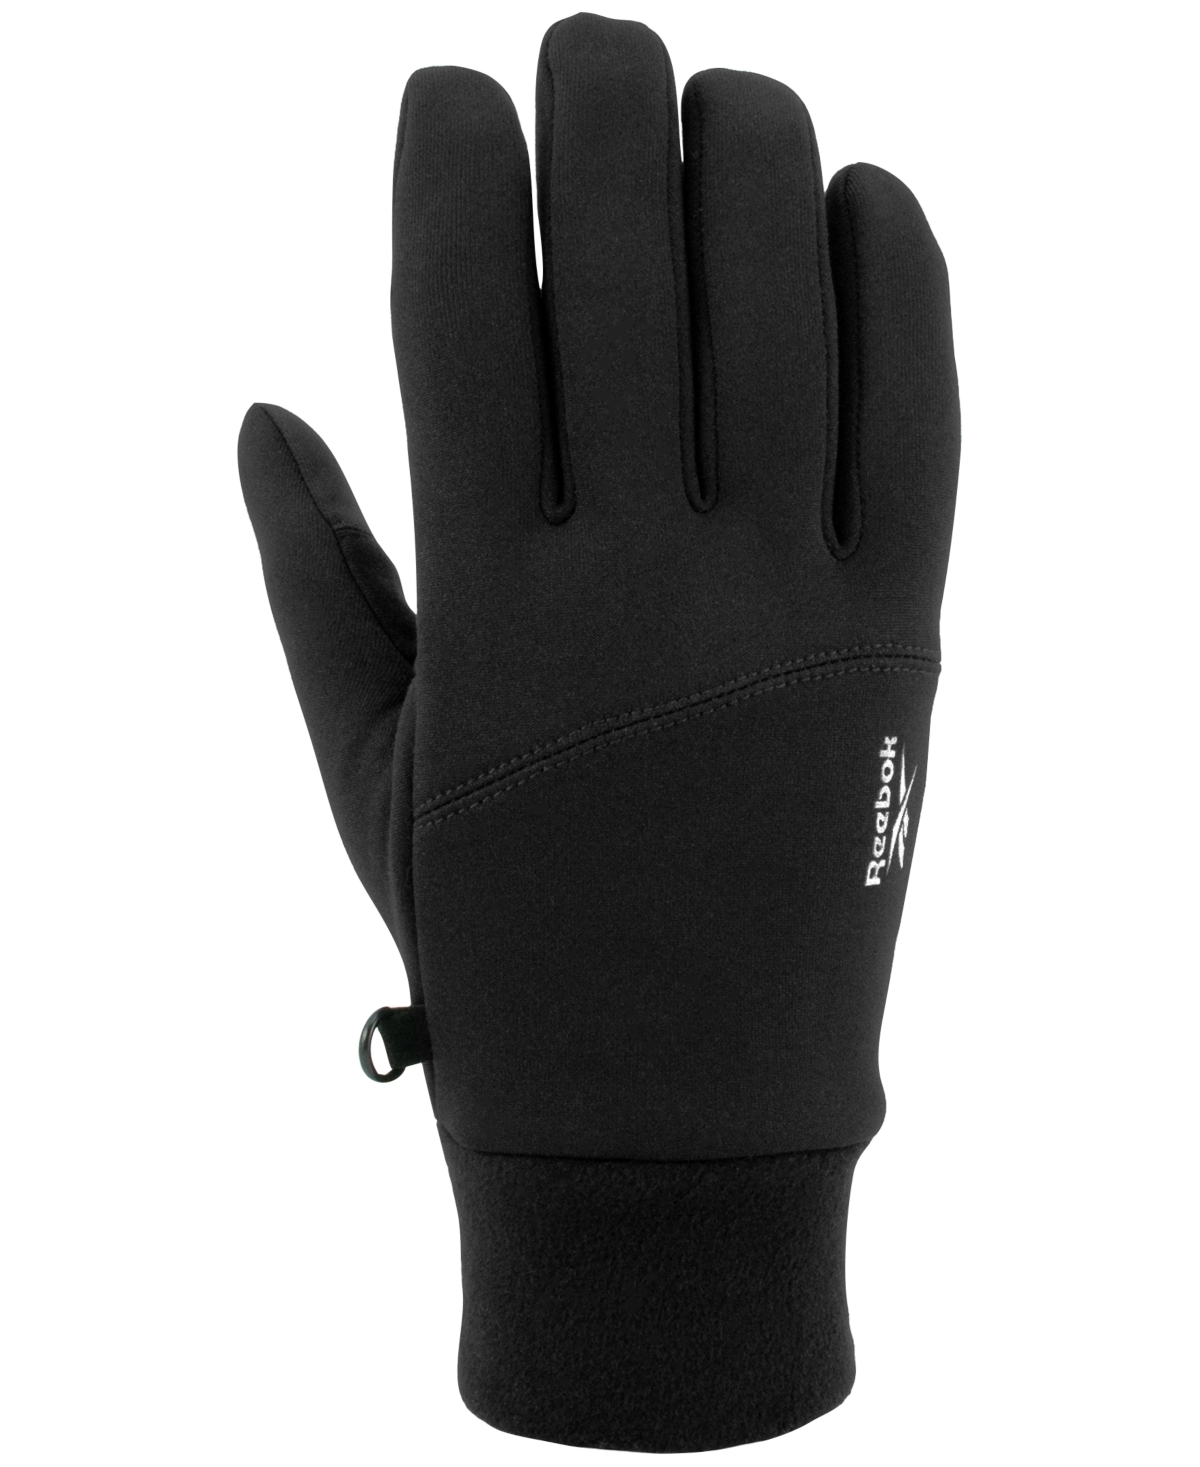 Men's Stretch Fleece Gloves - Black